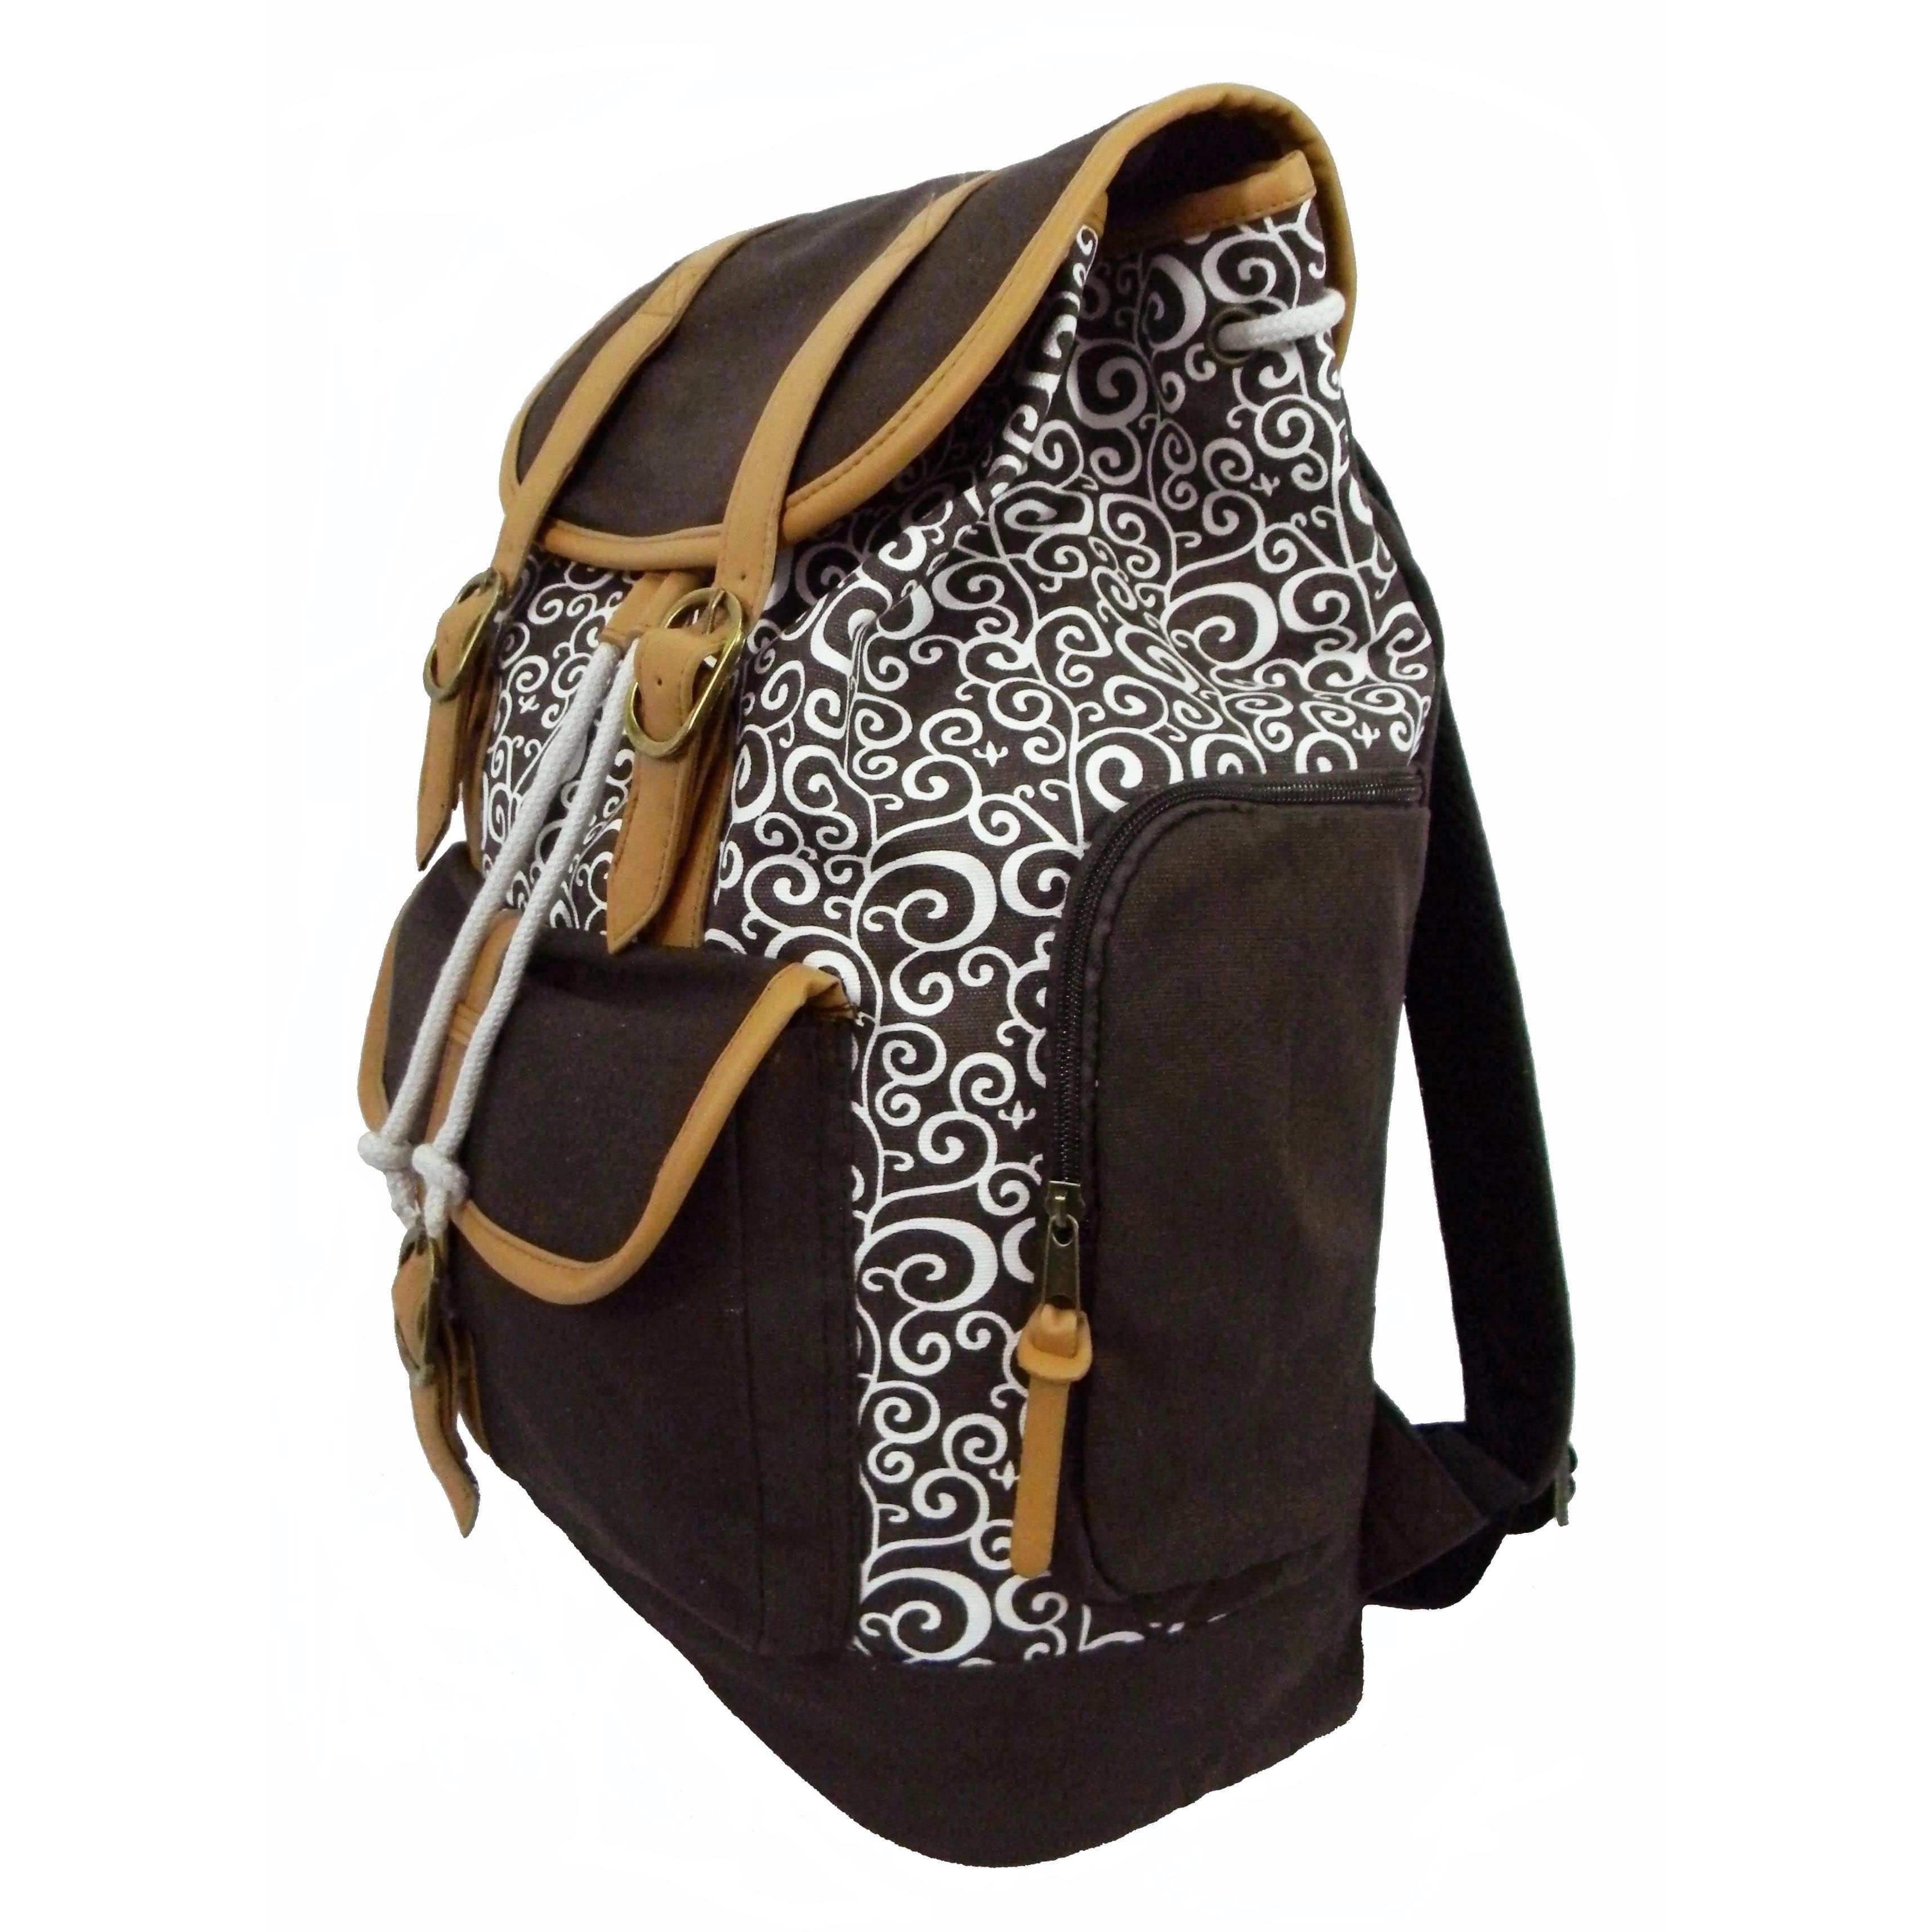 Lightweight MAPOLO Laptop Backpack White Bull Dog Pattern Casual Shoulder Daypack for Student School Bag Handbag 